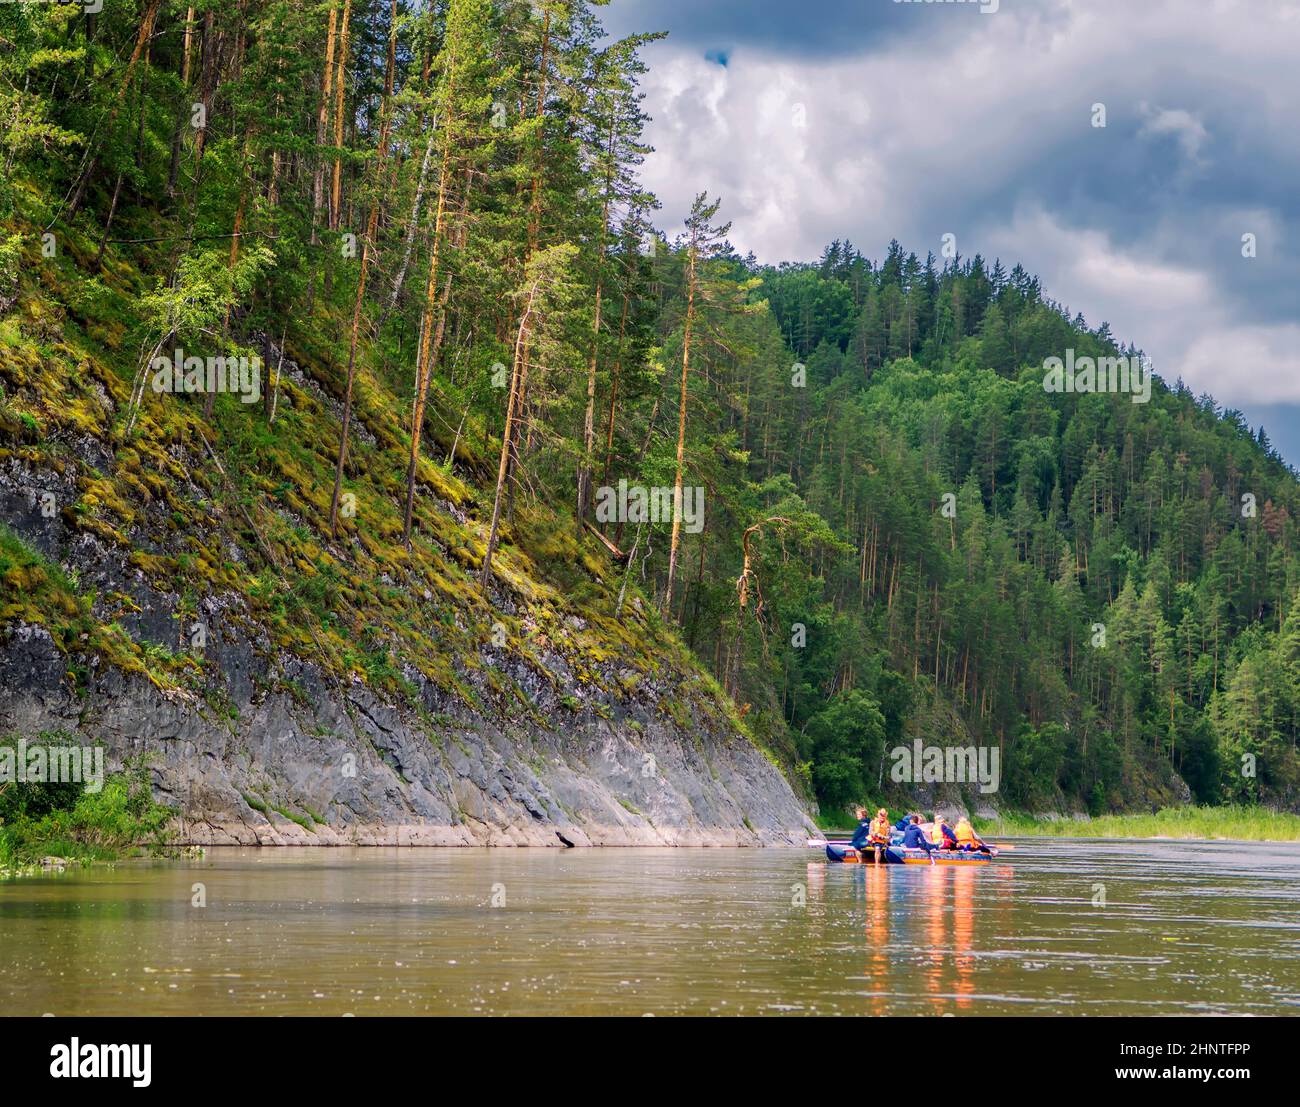 07. Juli 2017, Russland, Baschkortostan, Rafting auf Belaya Flusslandschaft Stockfoto